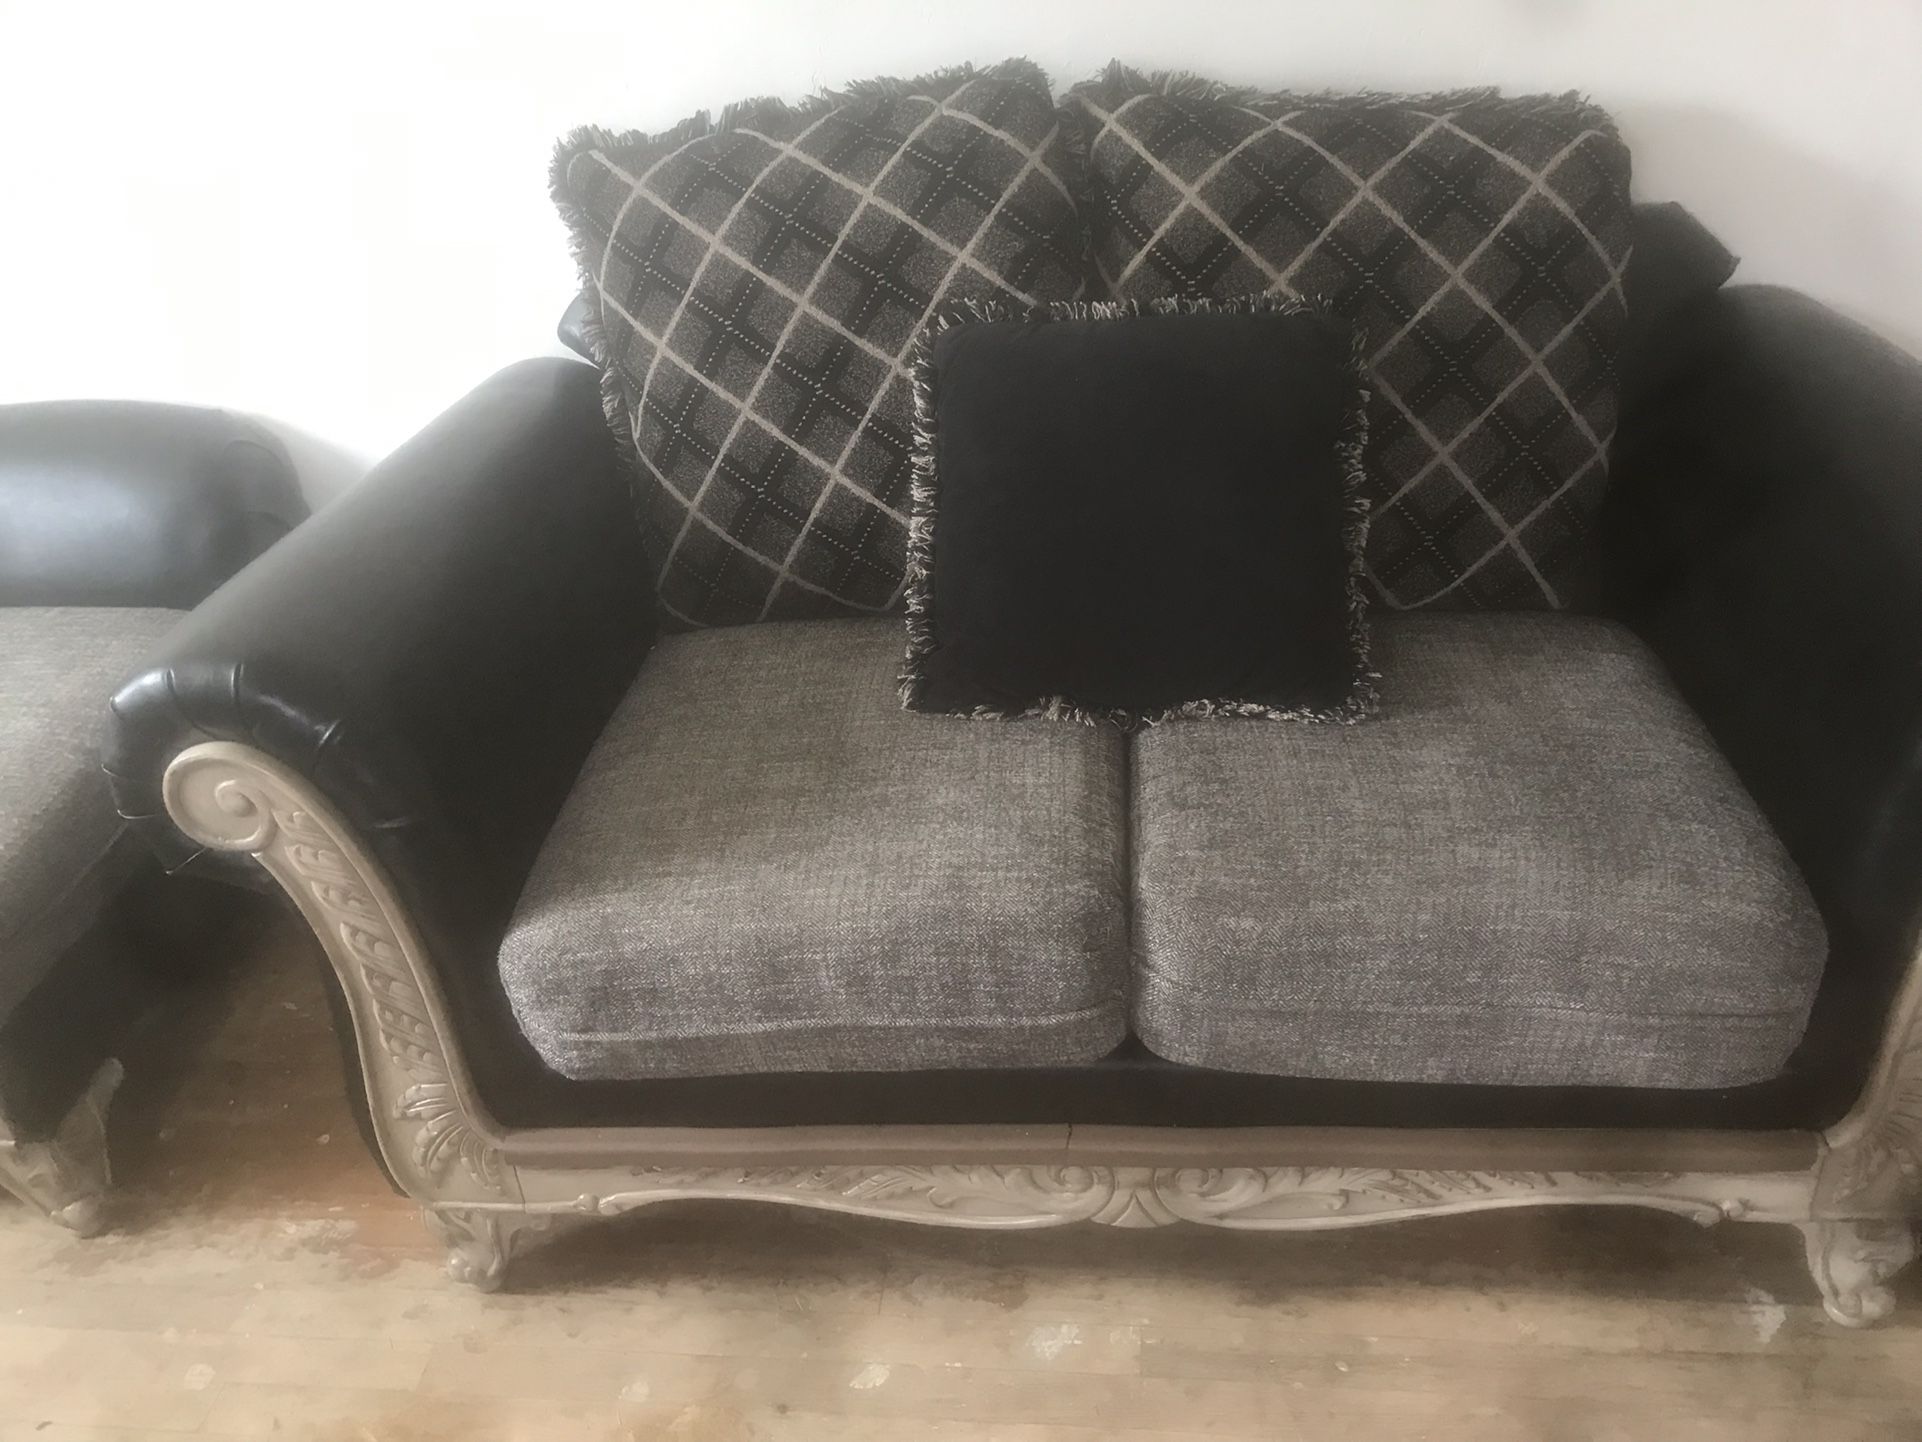 Leather Furniture + 55” Screen tv